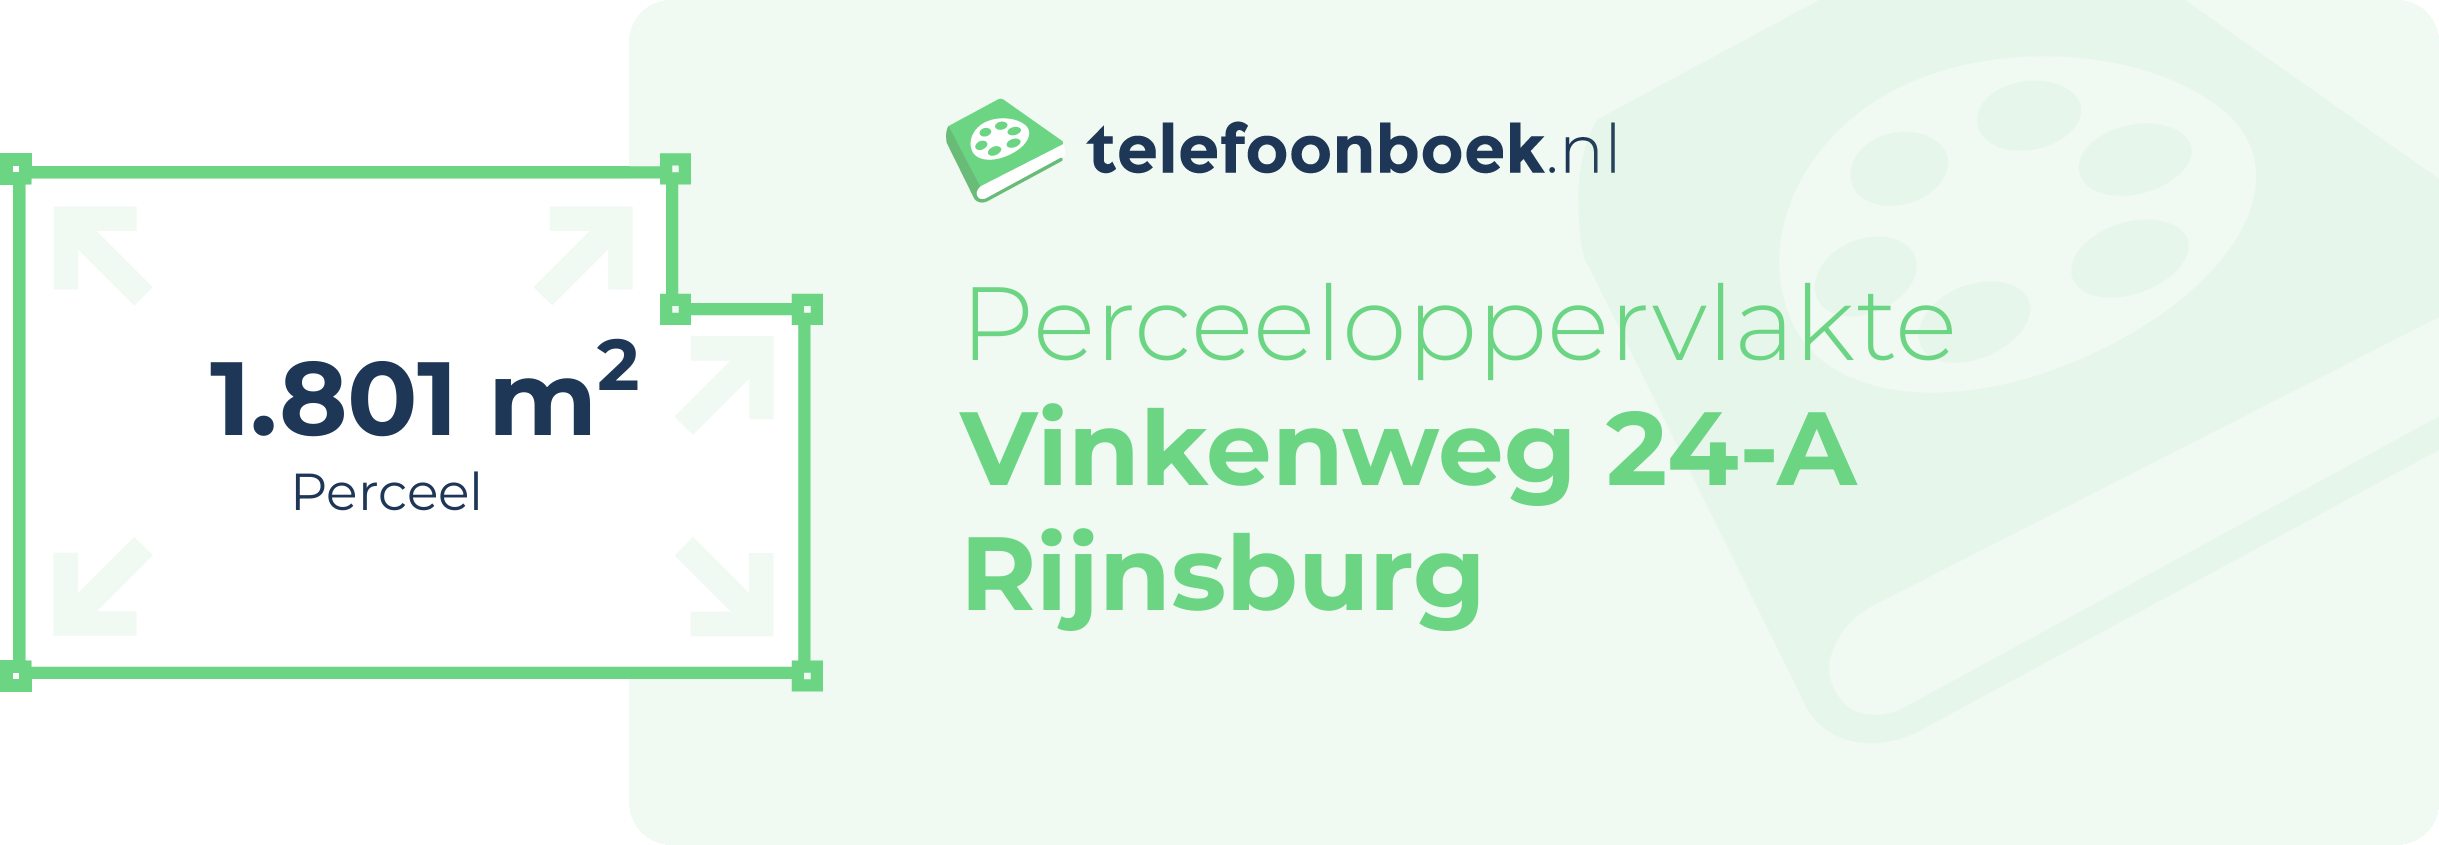 Perceeloppervlakte Vinkenweg 24-A Rijnsburg